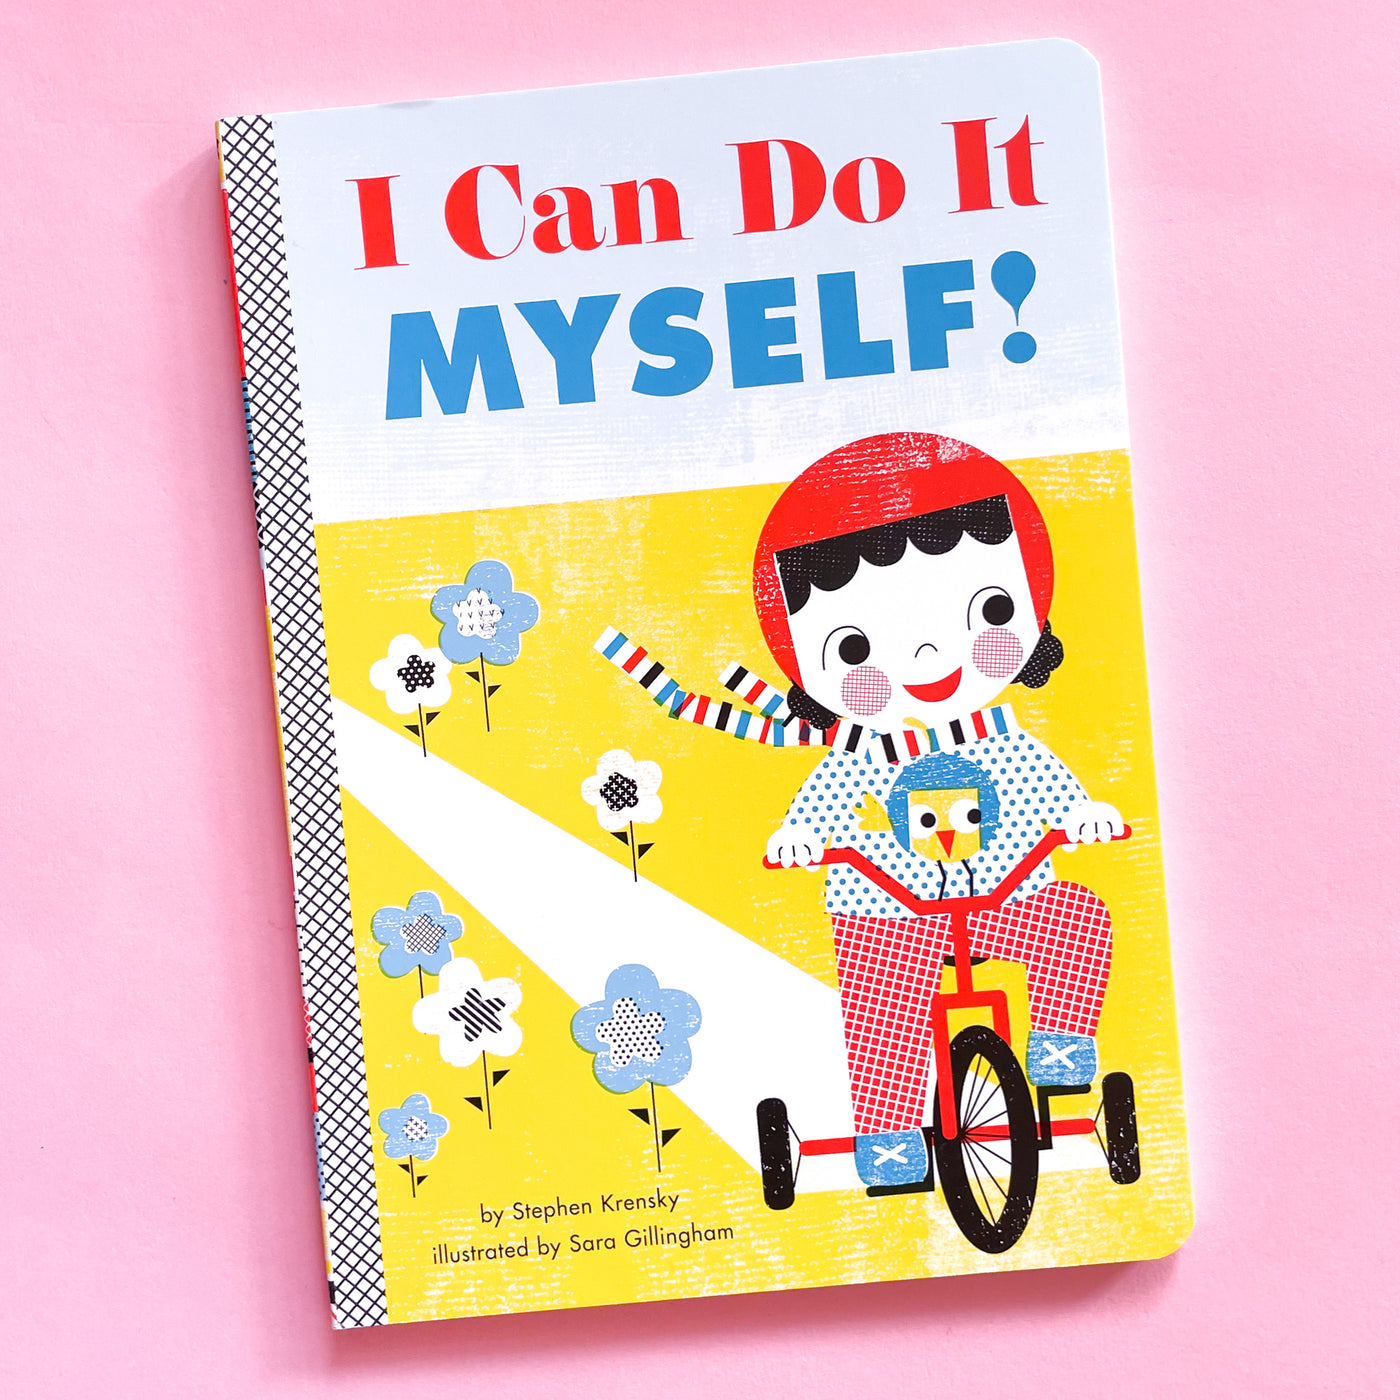 I Can Do It Myself! by Stephen Krensky and Sara Gillingham